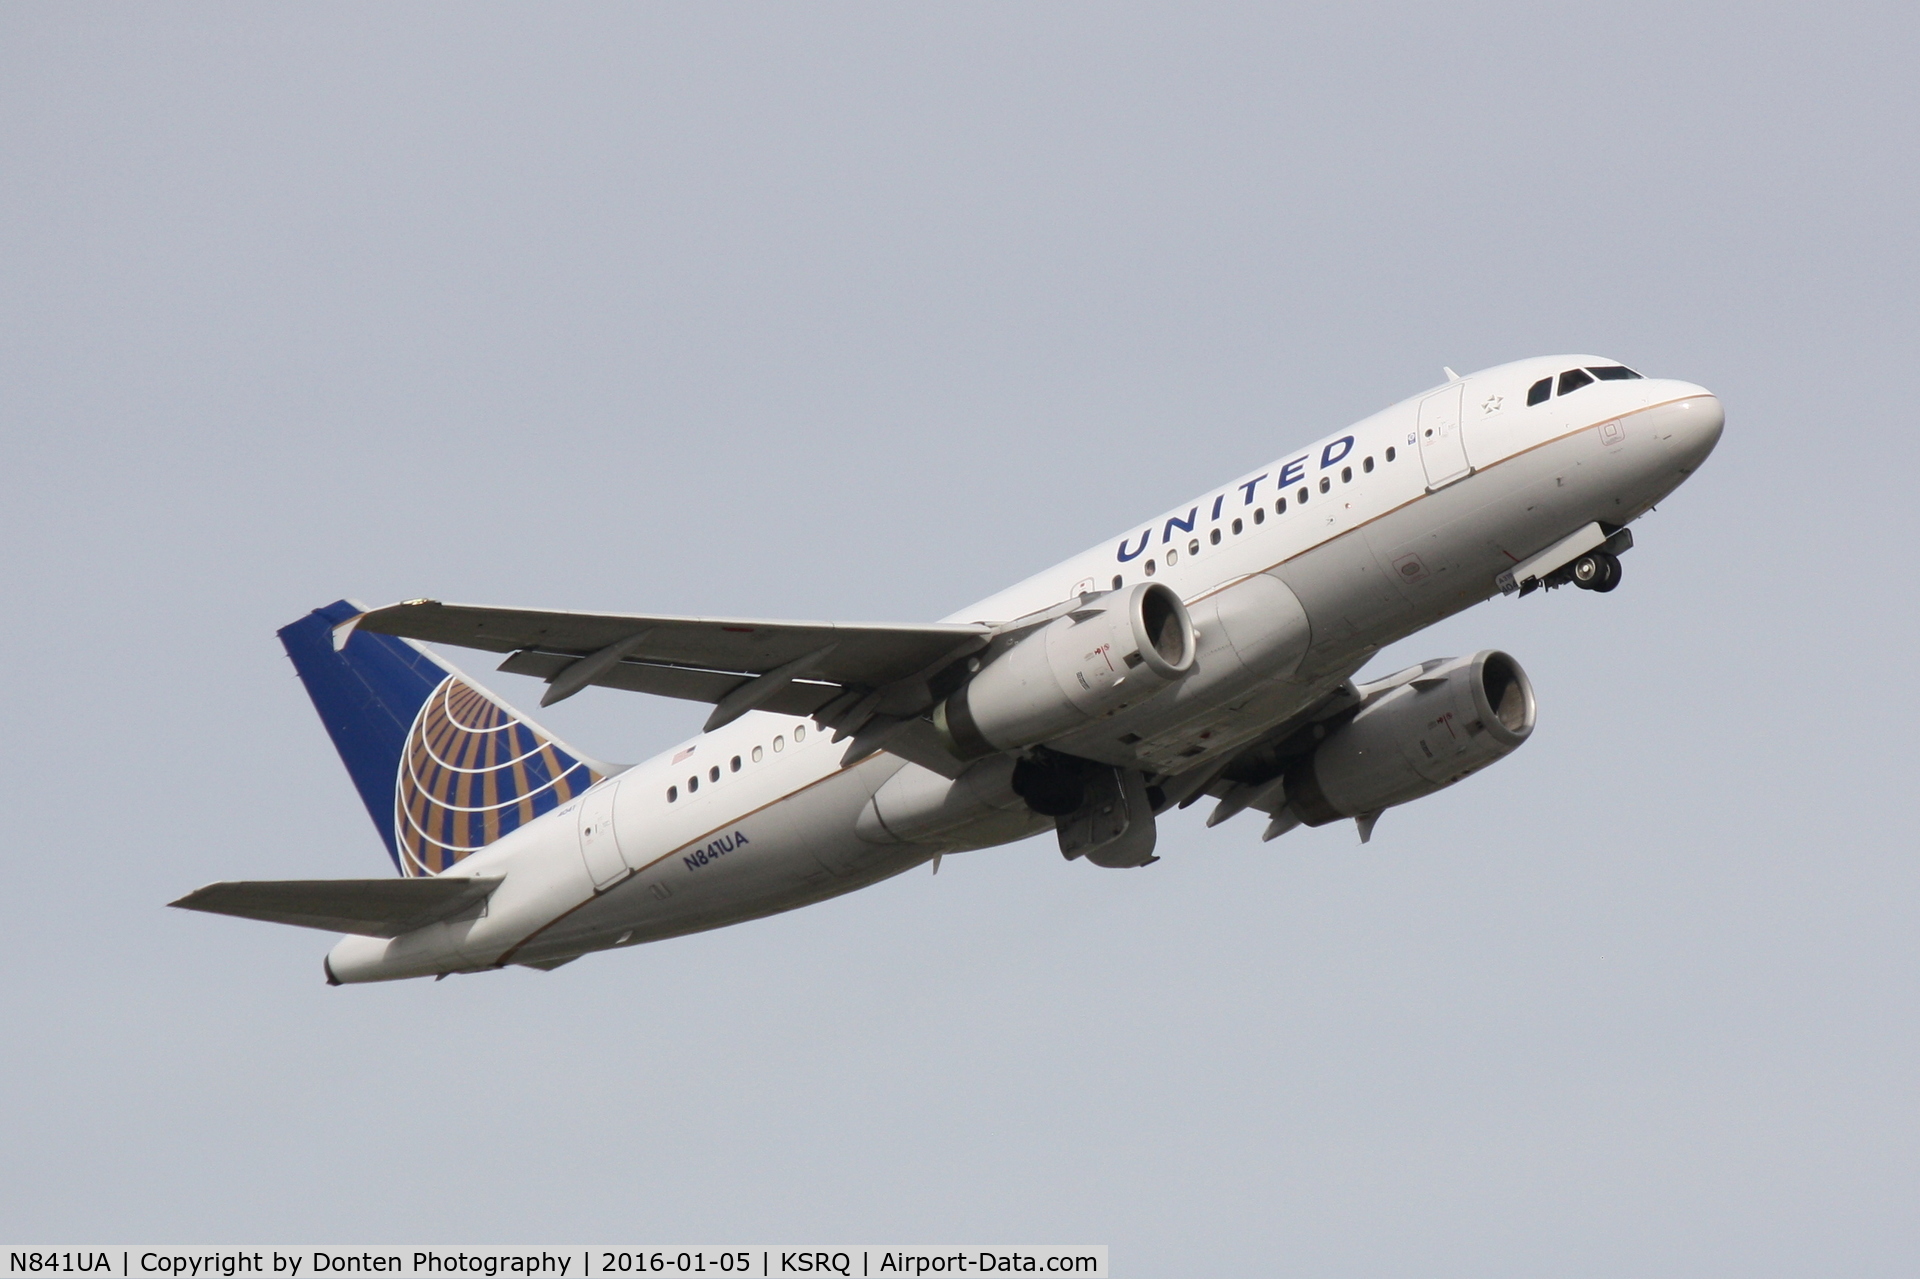 N841UA, 2001 Airbus A319-131 C/N 1545, United Flight 1641 (N841UA) departs Sarasota-Bradenton International Airport enroute to Chicago-O'Hare International Airport